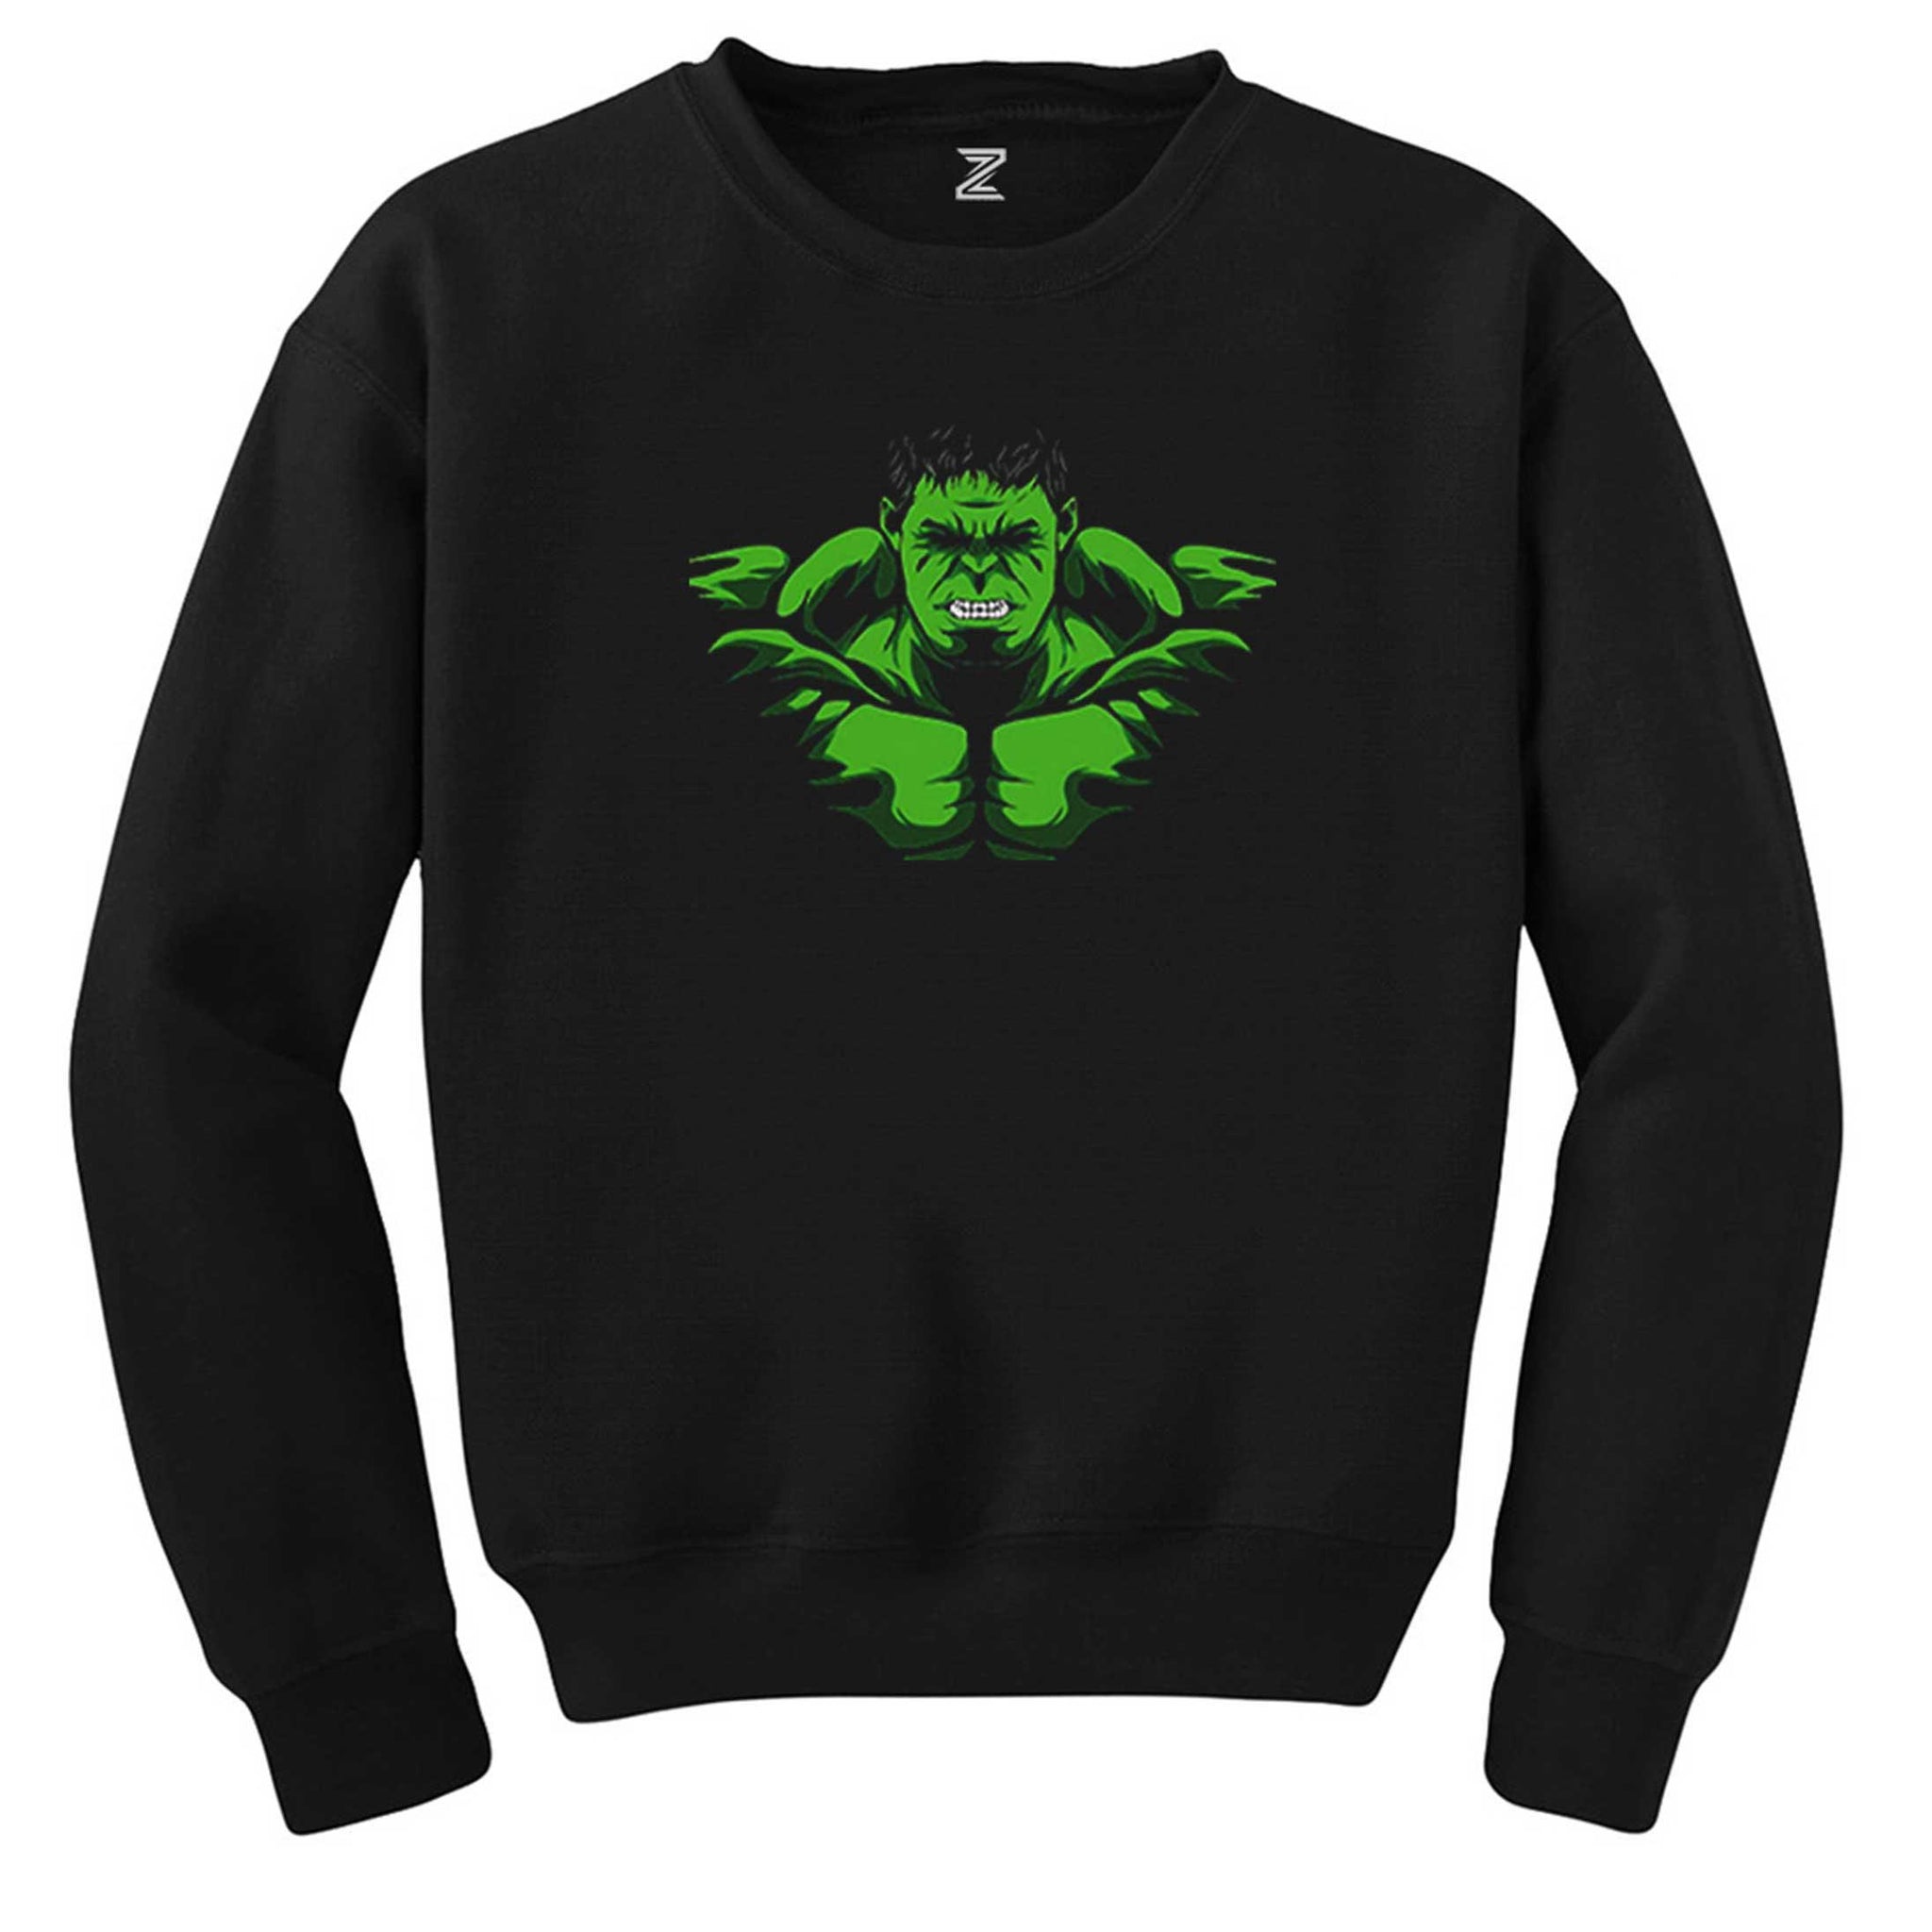 Hulk Angry Siyah Sweatshirt - Zepplingiyim